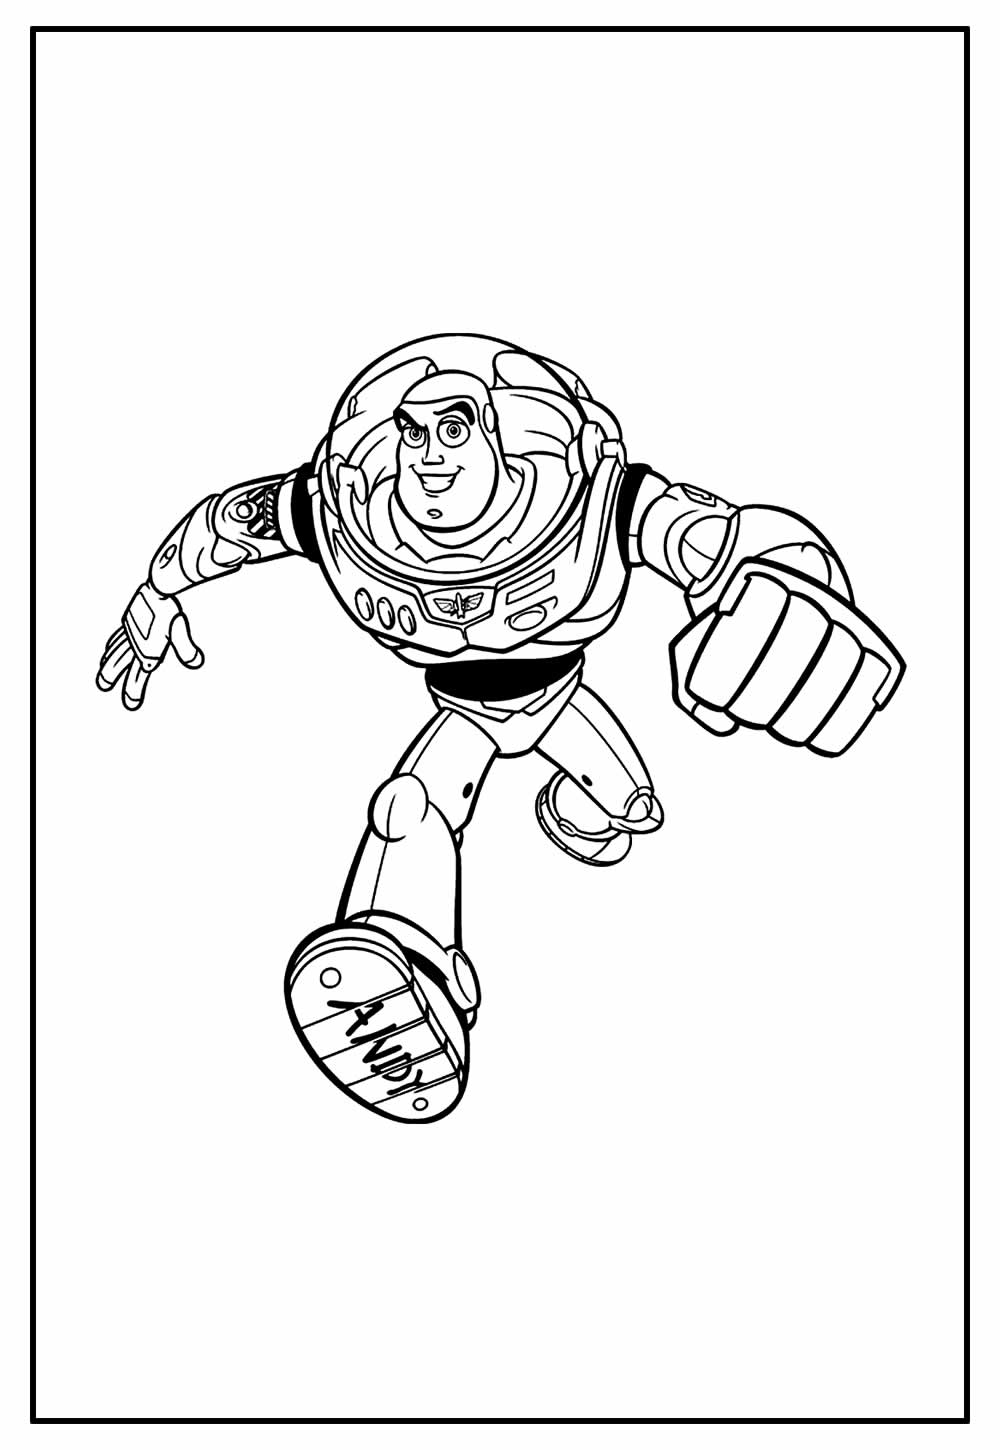 Desenho de Buzz Lightyear